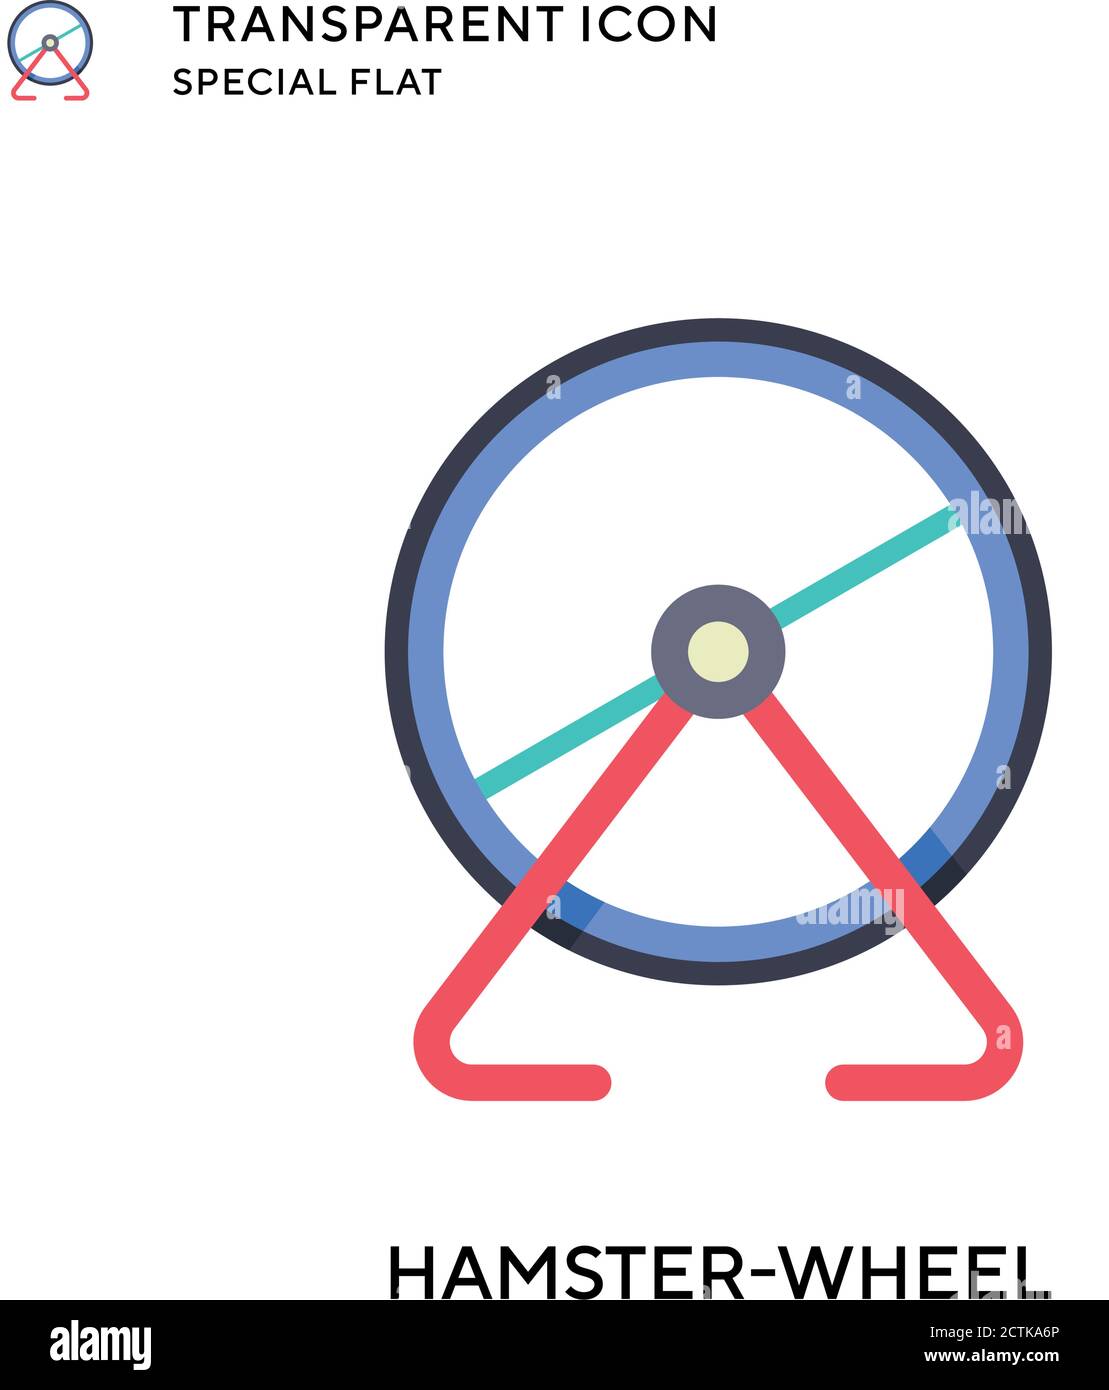 Hamster-wheel vector icon. Flat style illustration. EPS 10 vector. Stock Vector